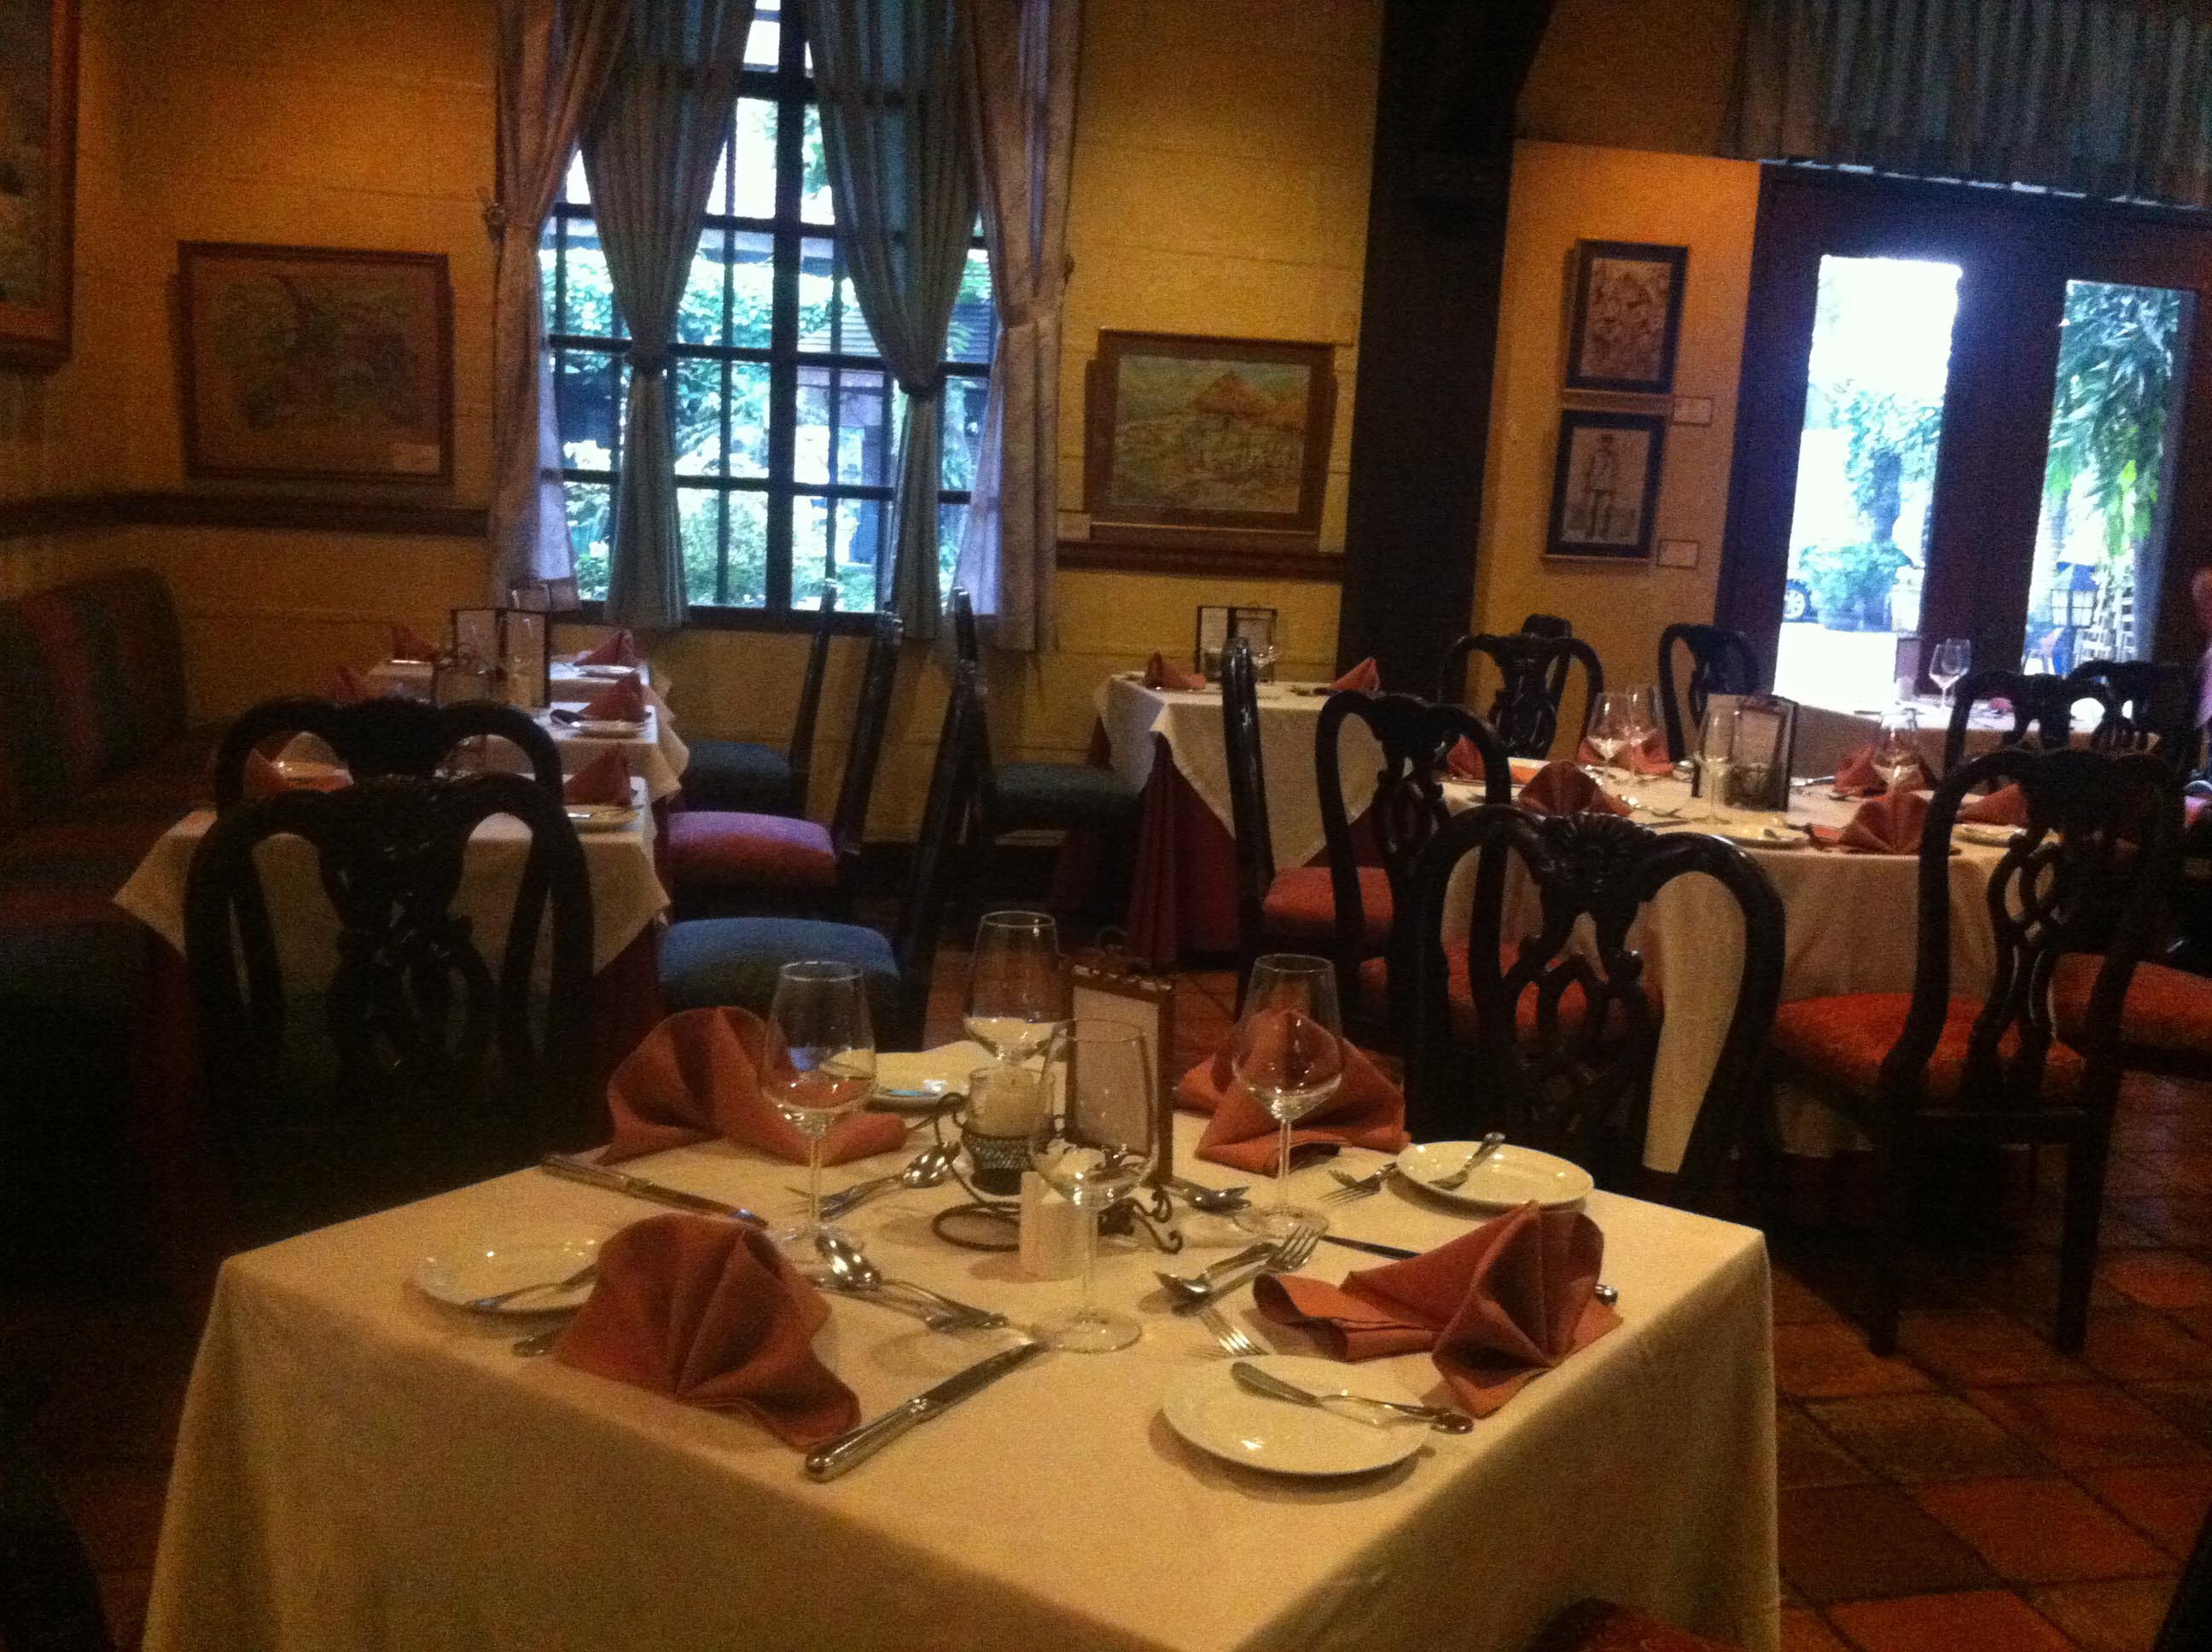 Ilustrado Restaurant Photos, Pictures of Ilustrado Restaurant, Intramuros, Manila - Zomato ...